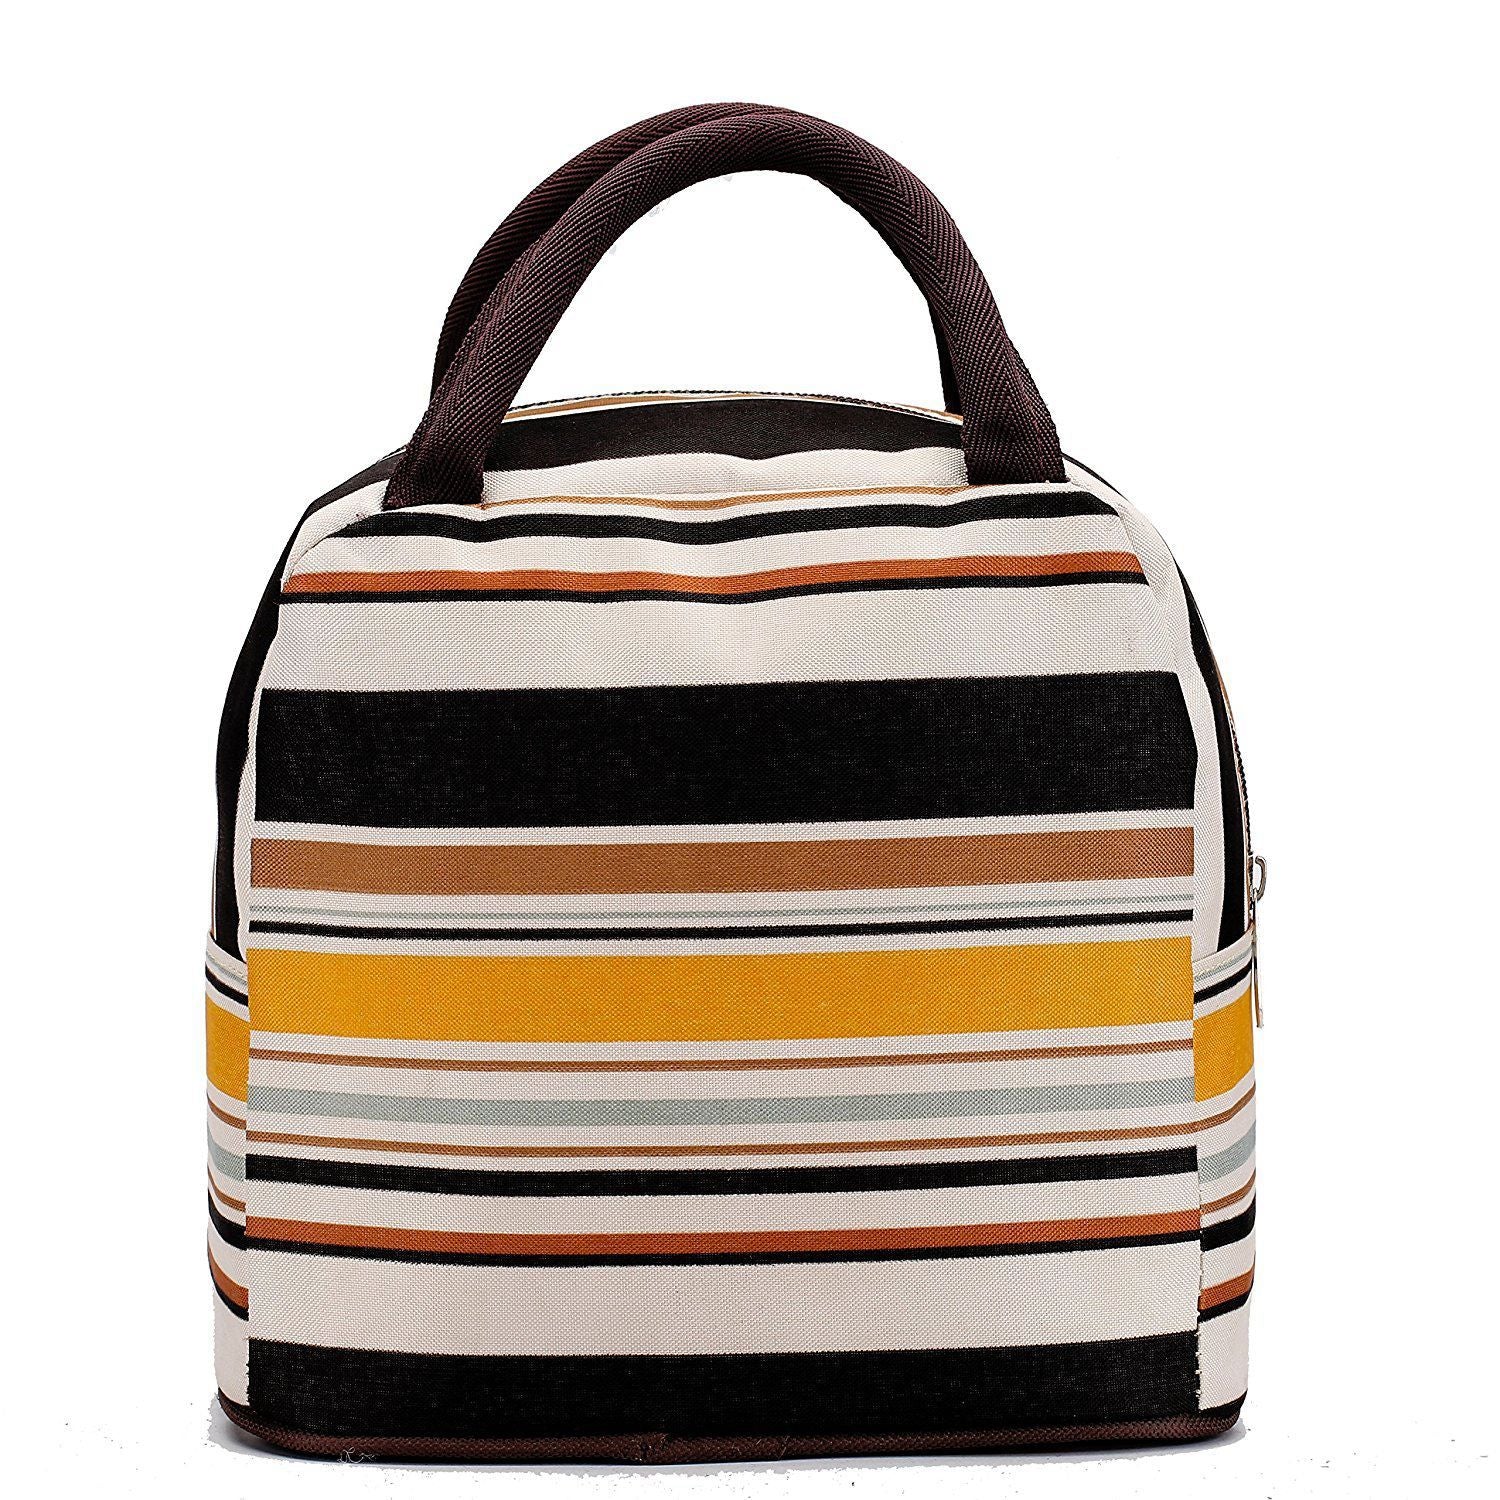 Fashion Zipper Lunch Bag Picnic Box for Women Tote Handbag Stripe pattern - ebowsos